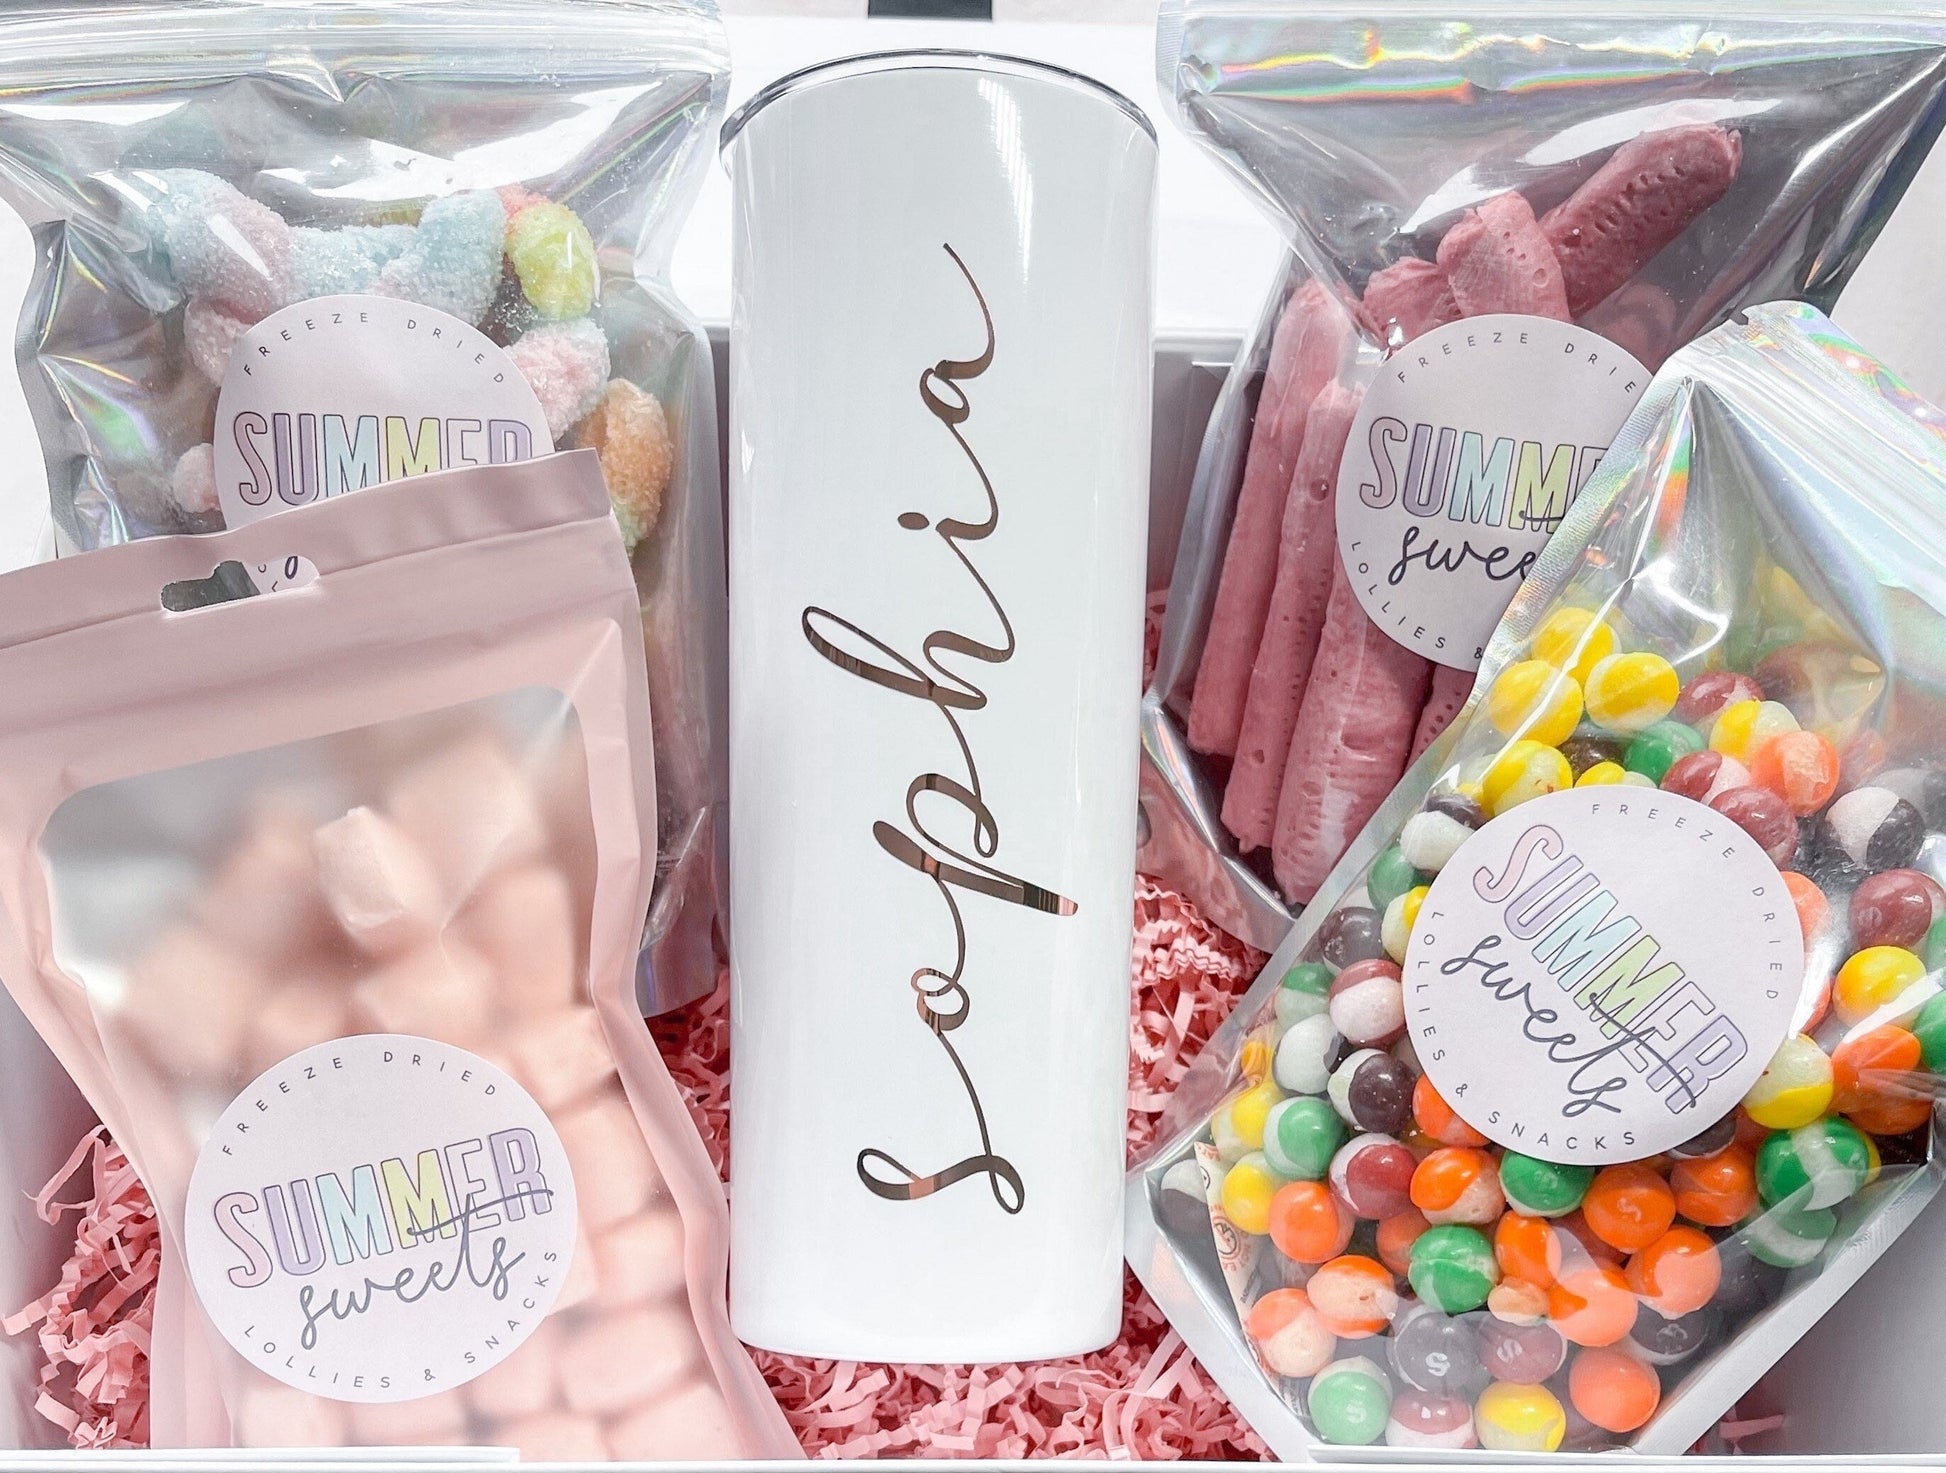 Personalised Freeze Dried Gift Box Candy Australia 